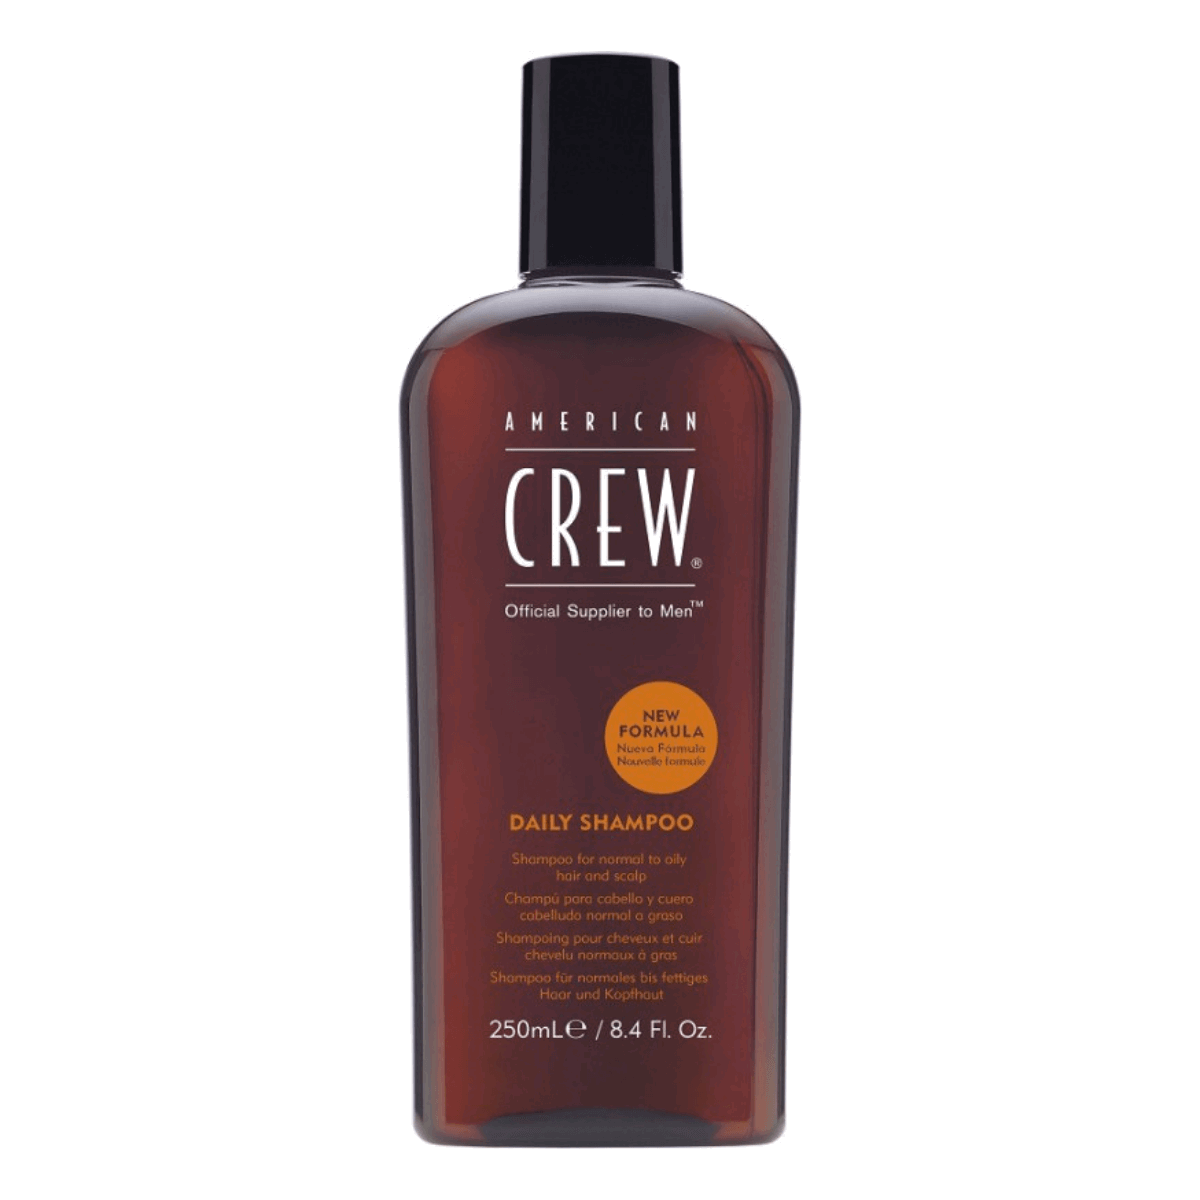 American Crew Daily Shampoo, 250 ml.